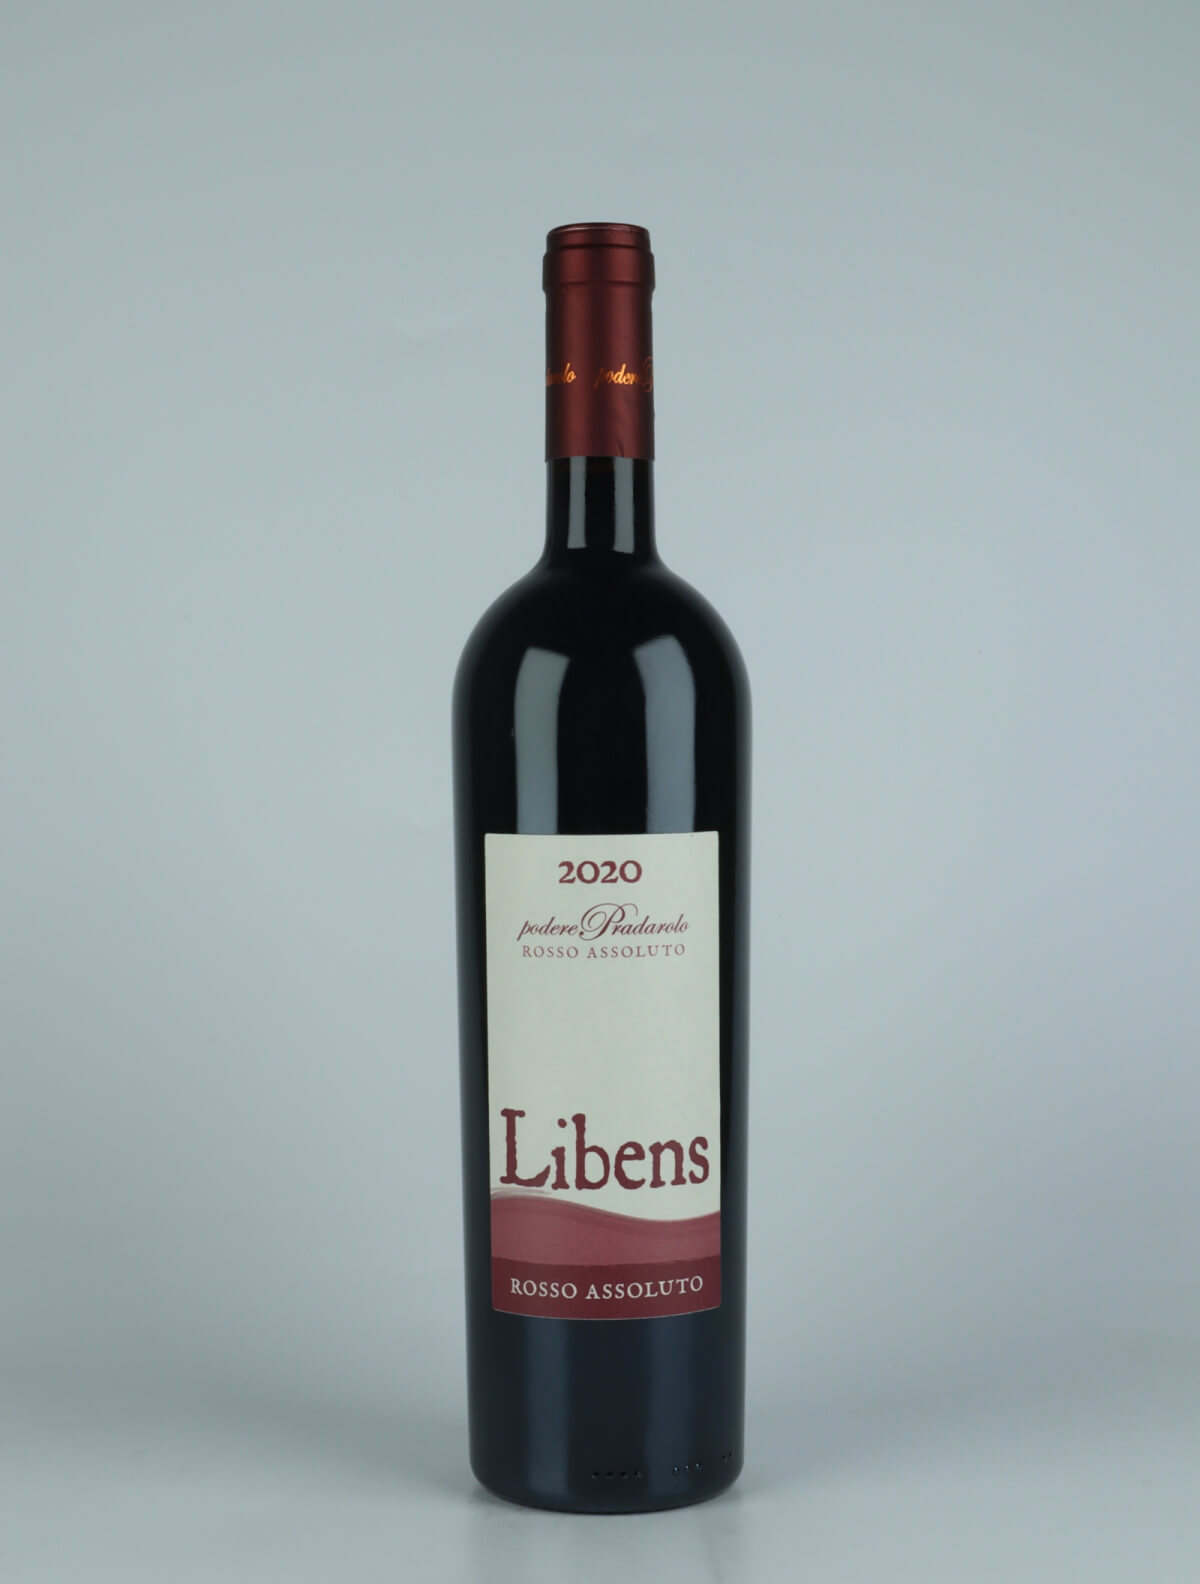 En flaske 2020 Libens - Rosso Assoluto Rødvin fra Podere Pradarolo, Emilia-Romagna i Italien